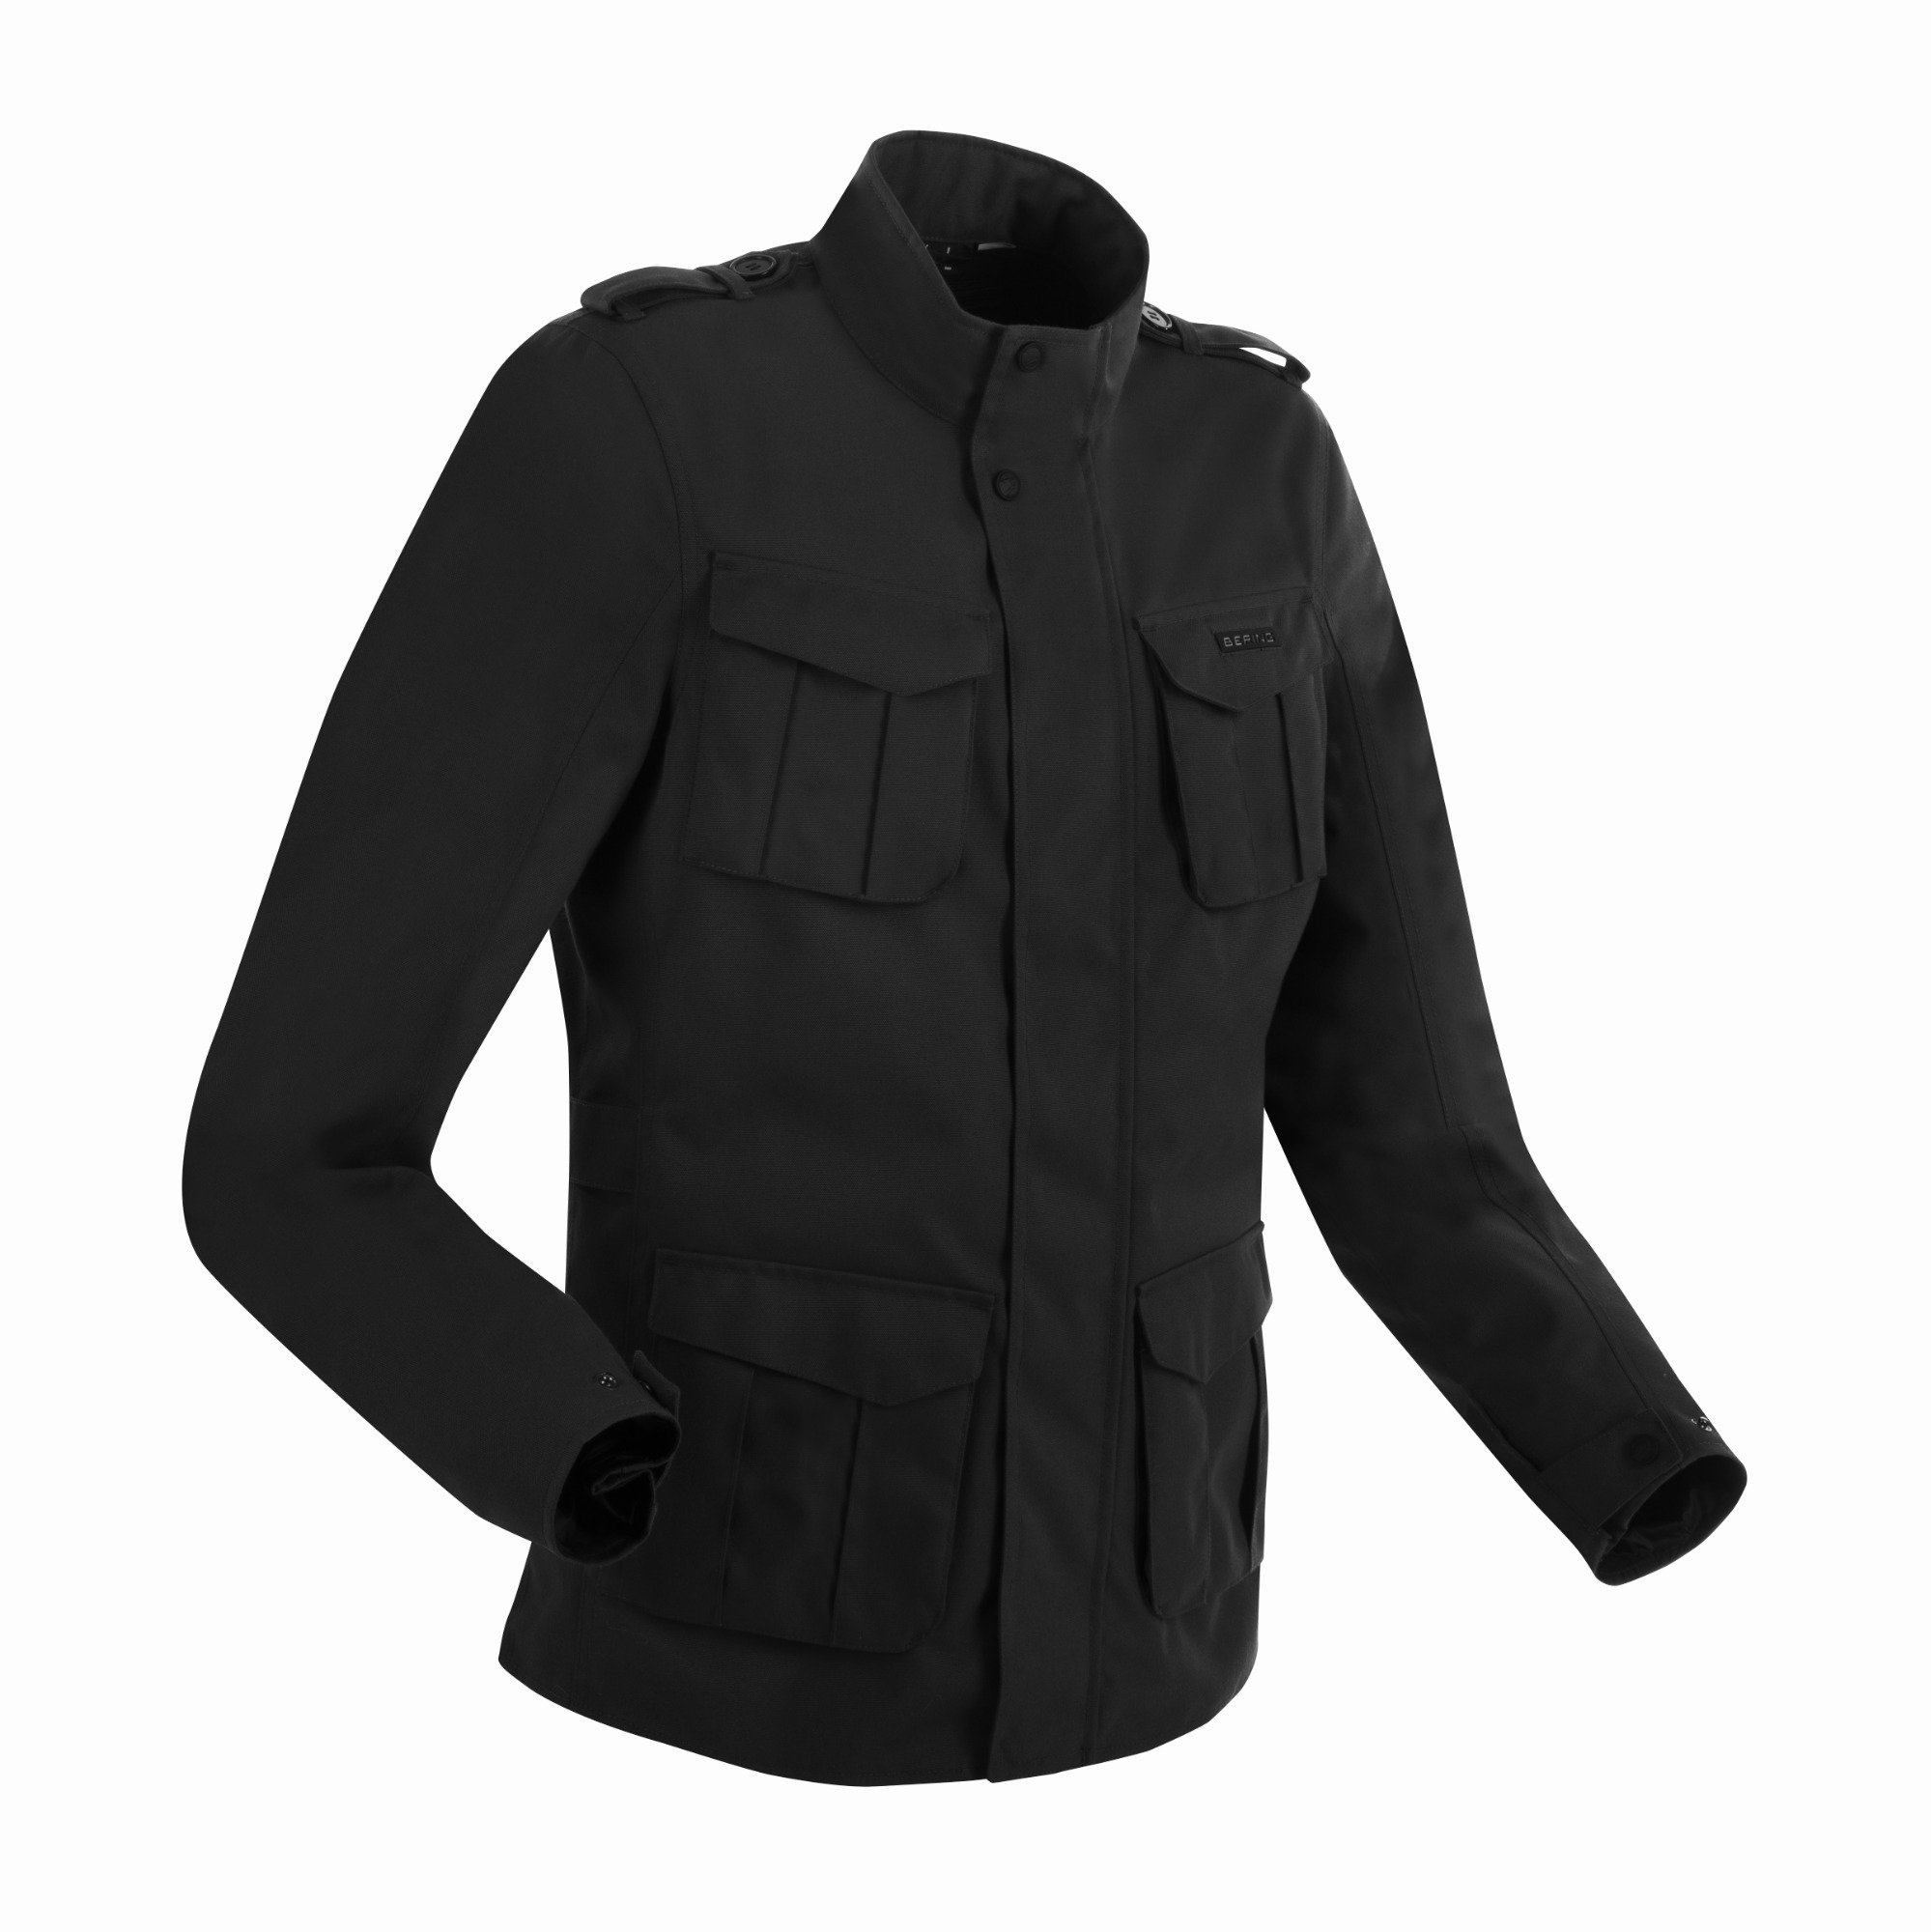 Image of Bering Norris Evo Jacket Black Size M ID 3660815167861